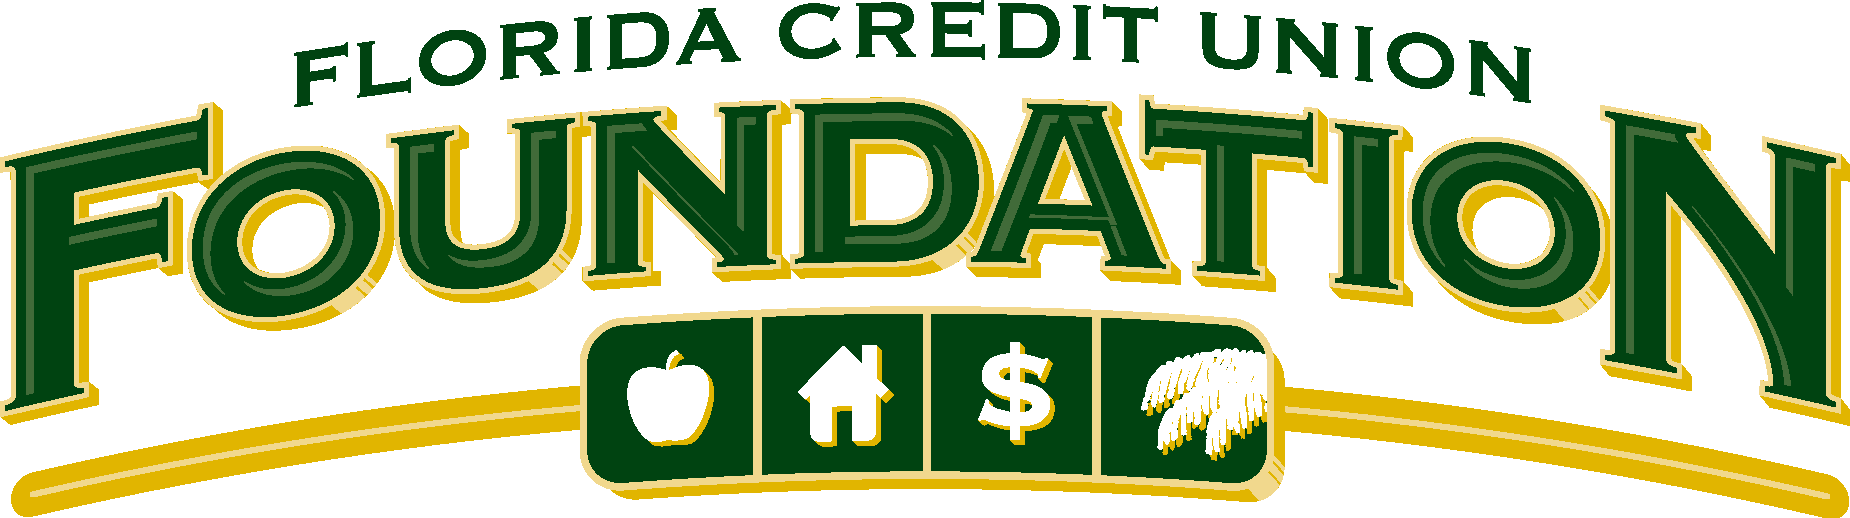 Florida Credit Union Foundation Logo Vector